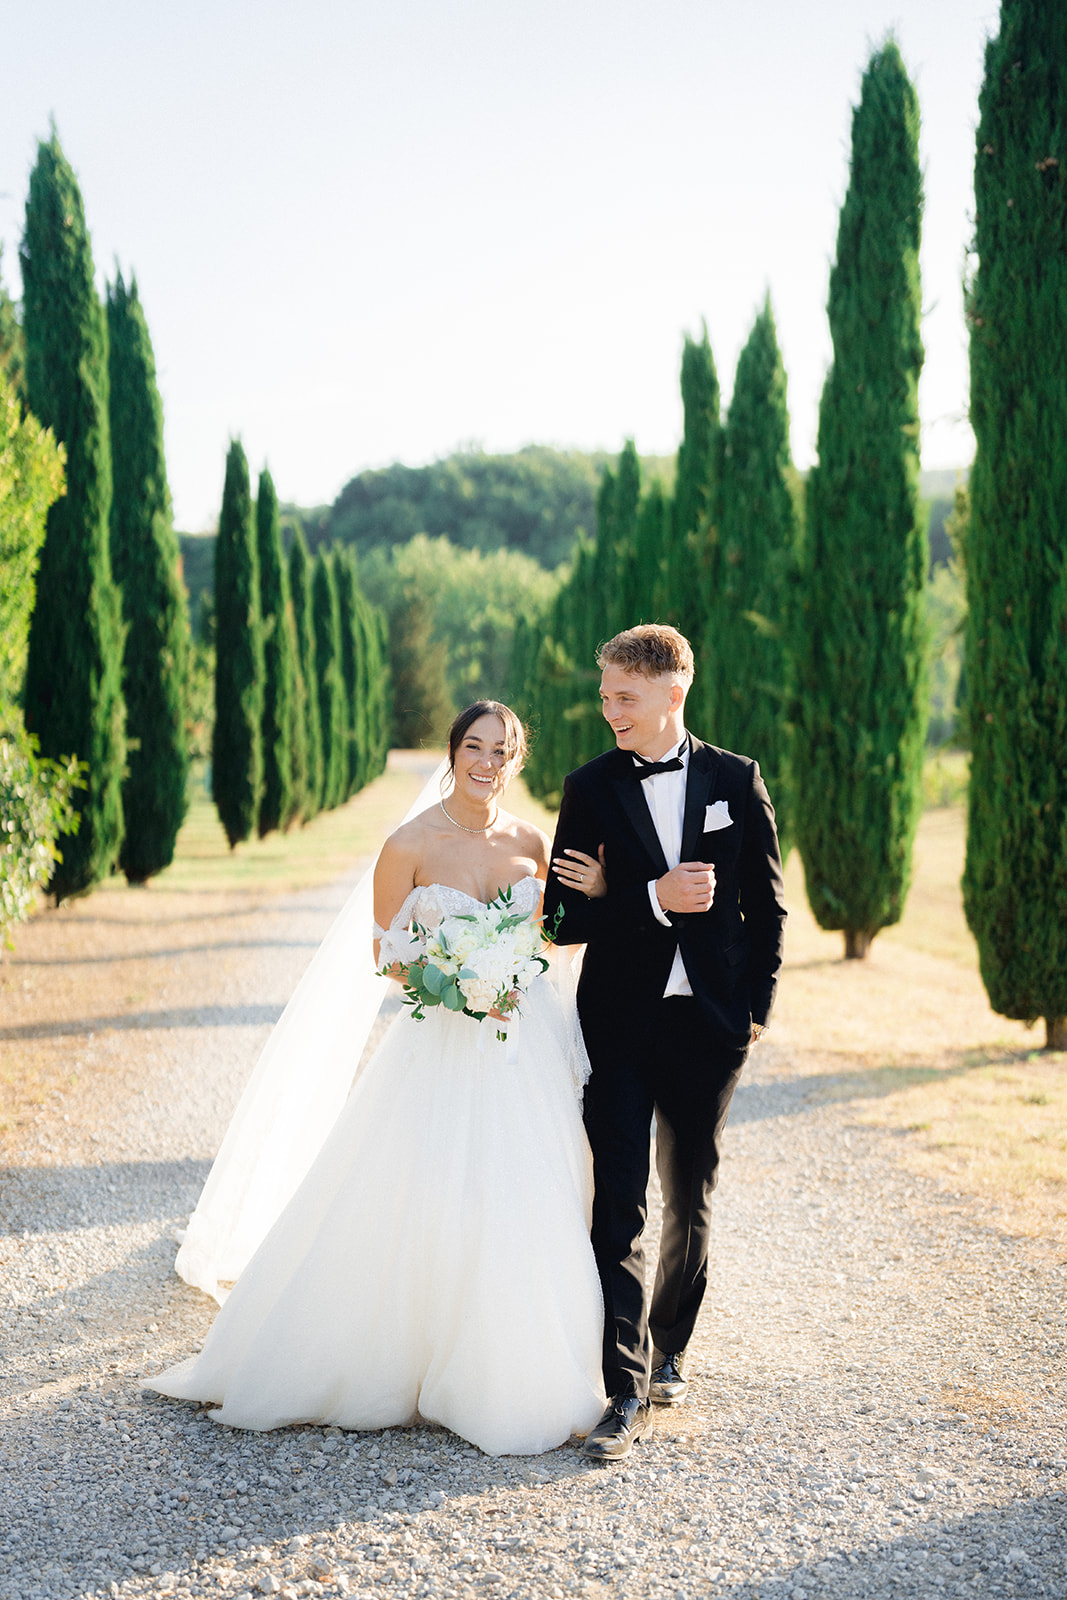 The newlyweds happily walking among the cypress trees near Villa La Selva